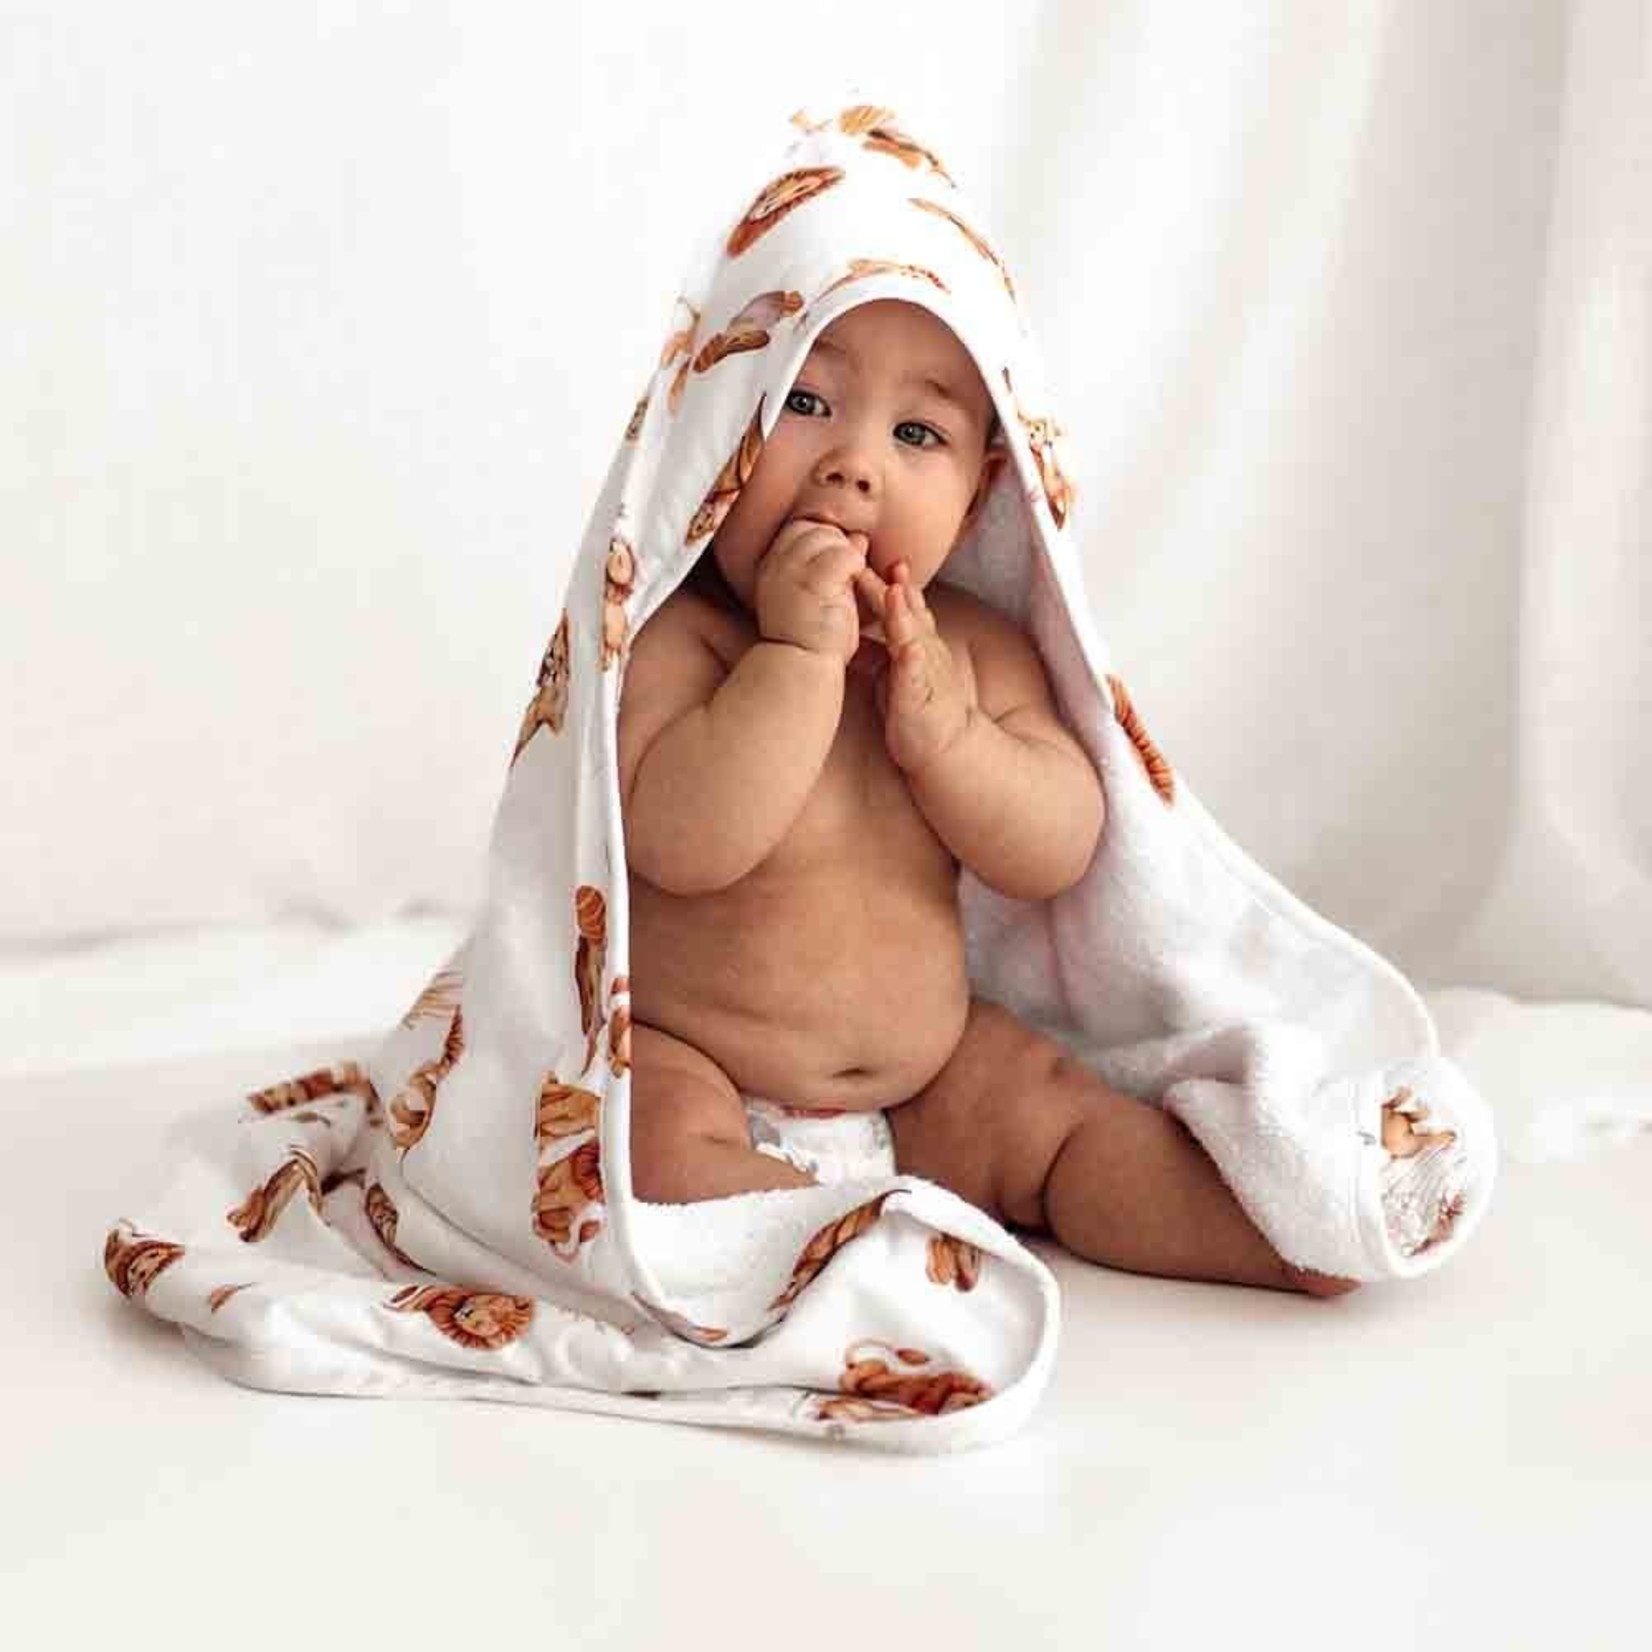 Snuggle Hunny Organic Hooded Baby Towel-Lion